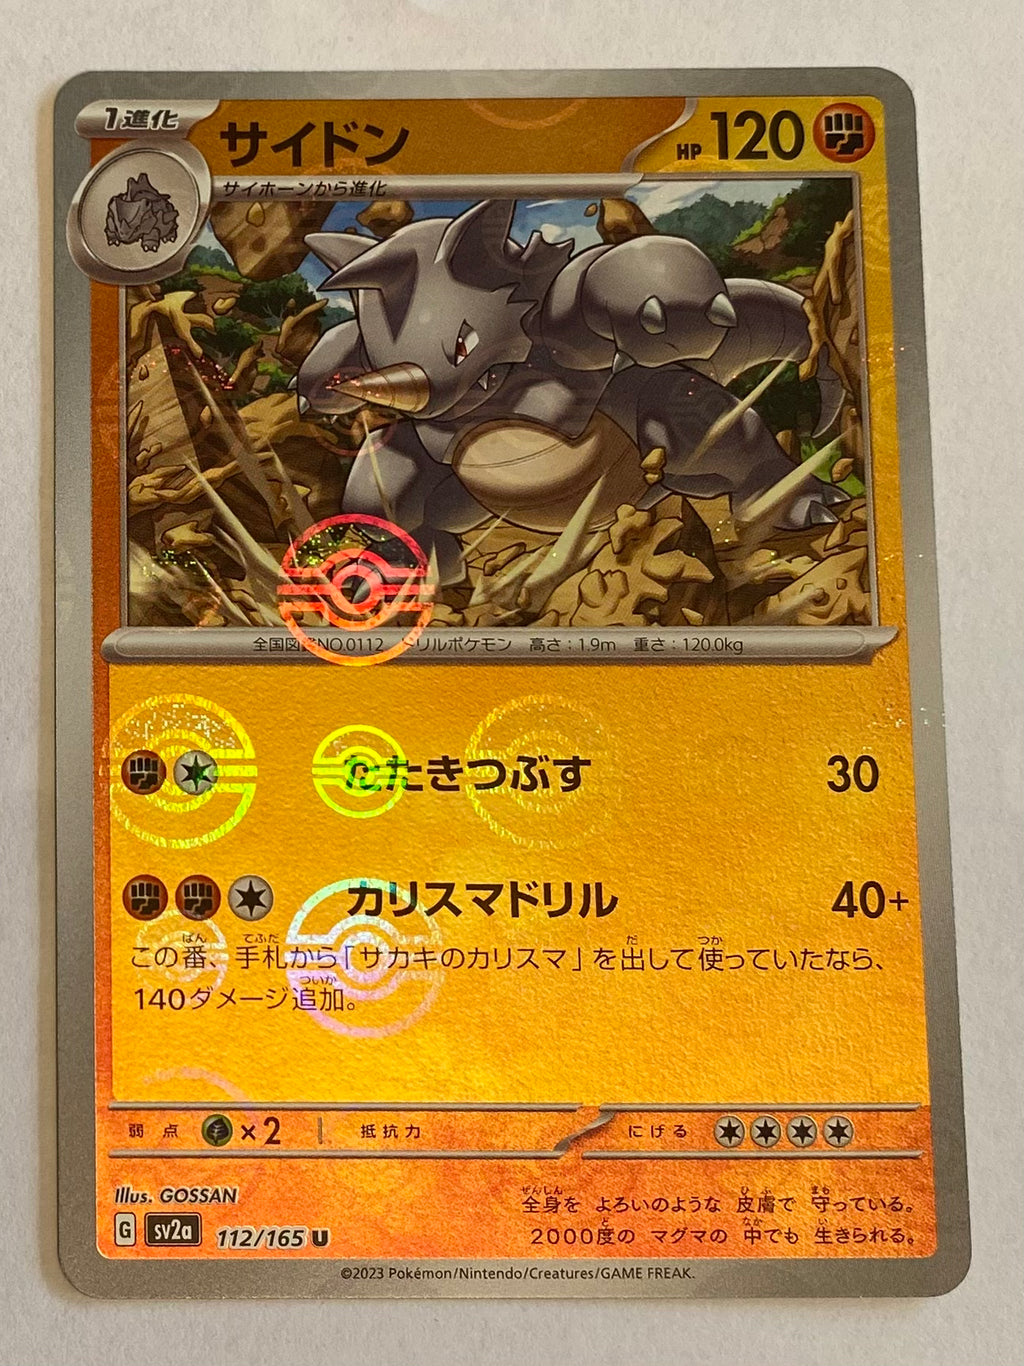 sv2a Japanese Pokemon Card 151 - 112/165 Rhydon Reverse Holo